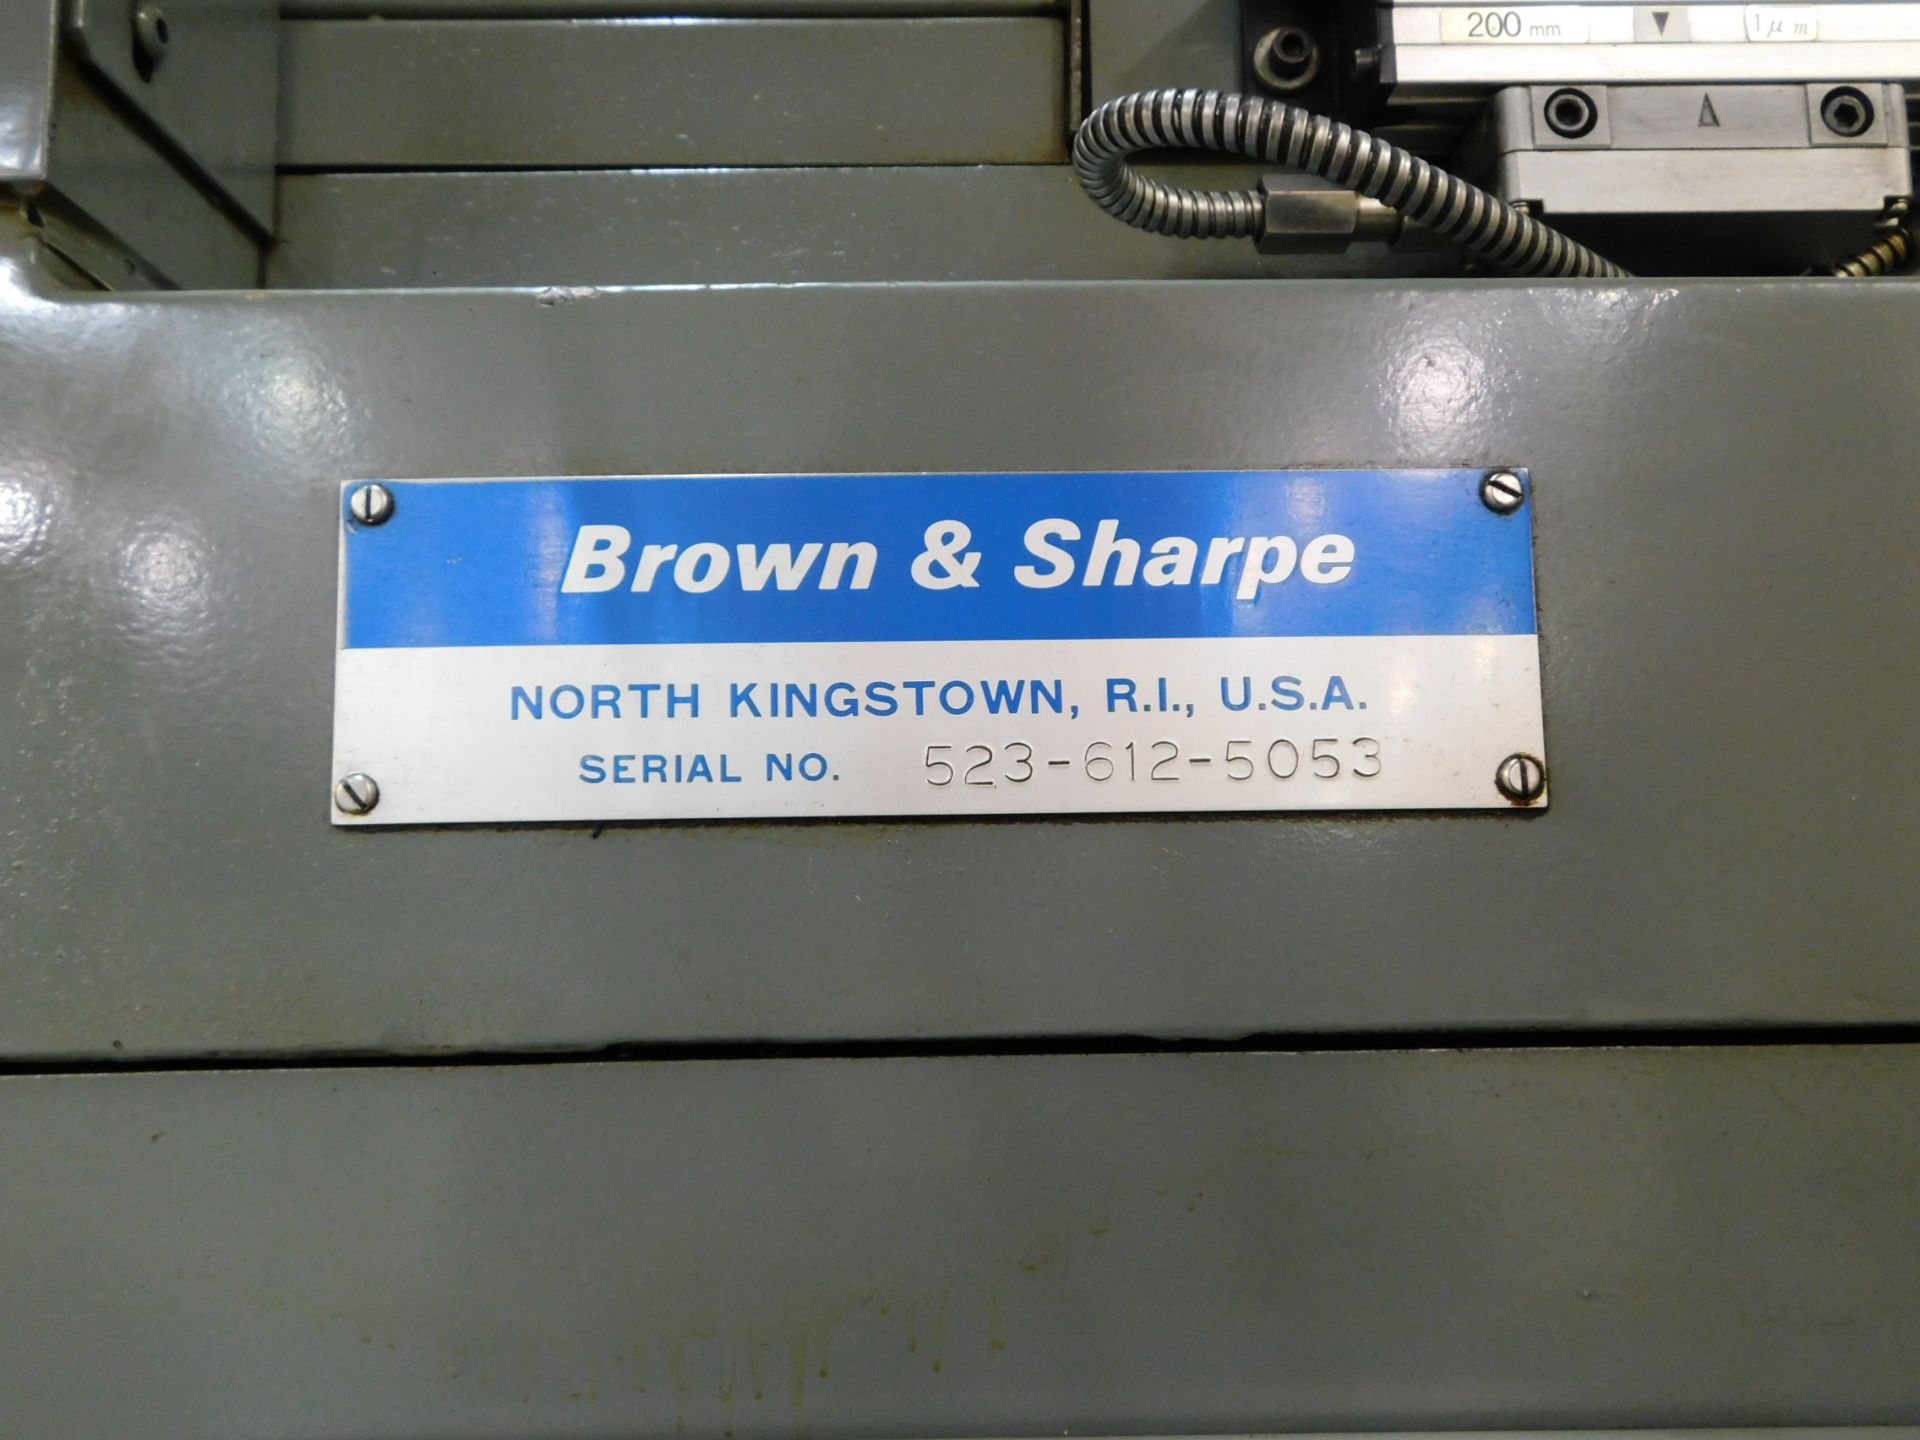 Brown & Sharpe Model 612 Valumaster Hand Feed Surface Grinder sn 523-612-5053, w/Walker 6"X12" - Image 8 of 9